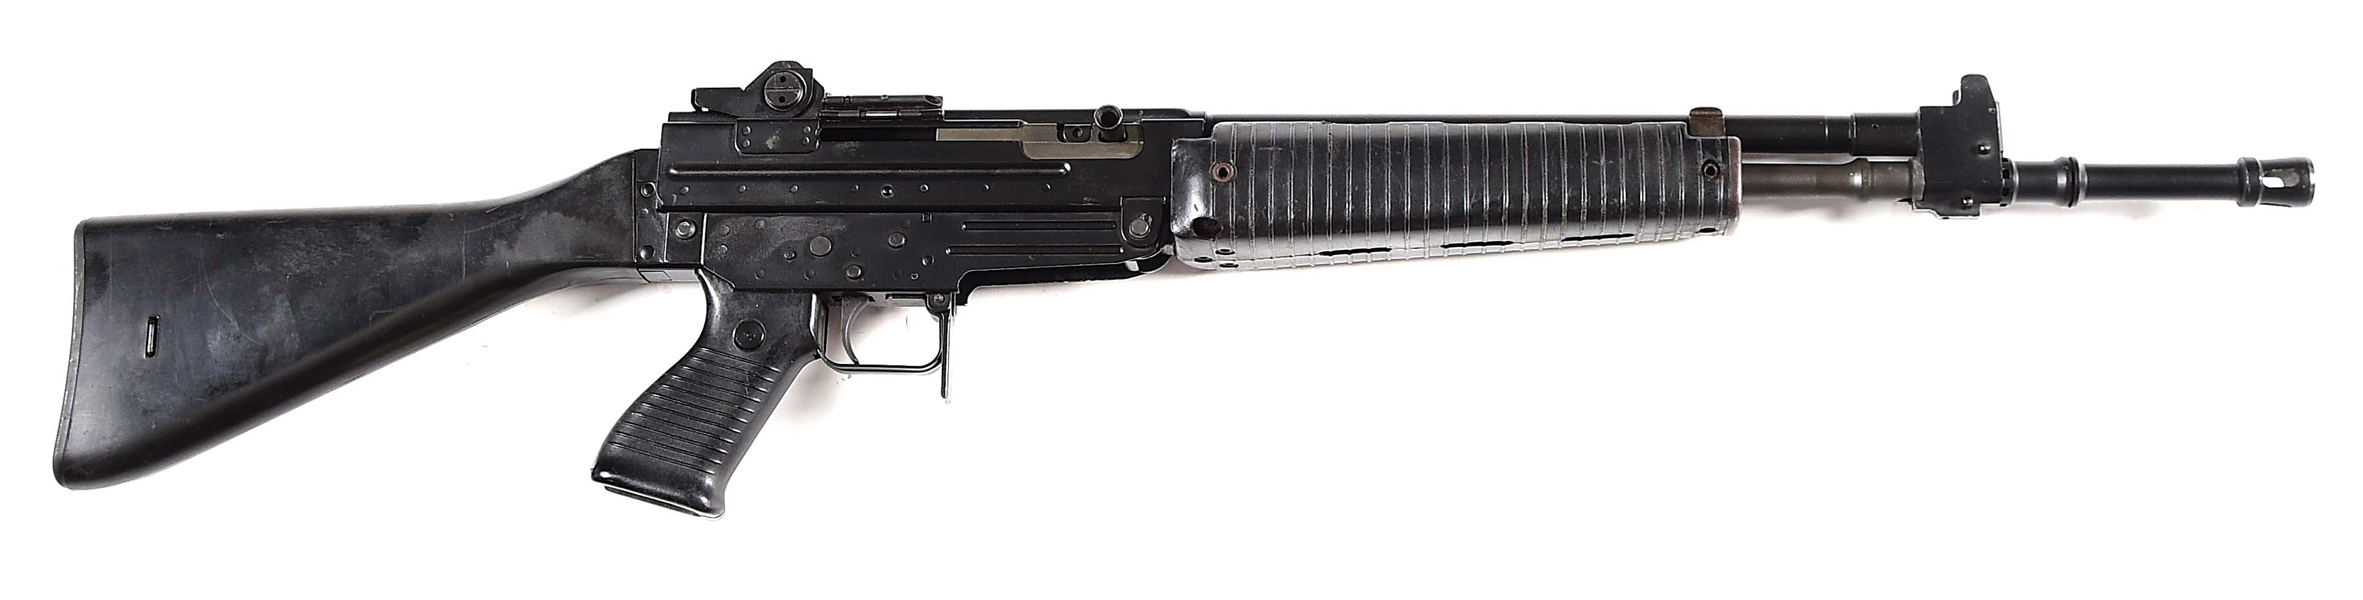 (N) FANTASTIC NEW IN BOX BERETTA AR-70 MACHINE GUN (PRE-86 DEALER SAMPLE).